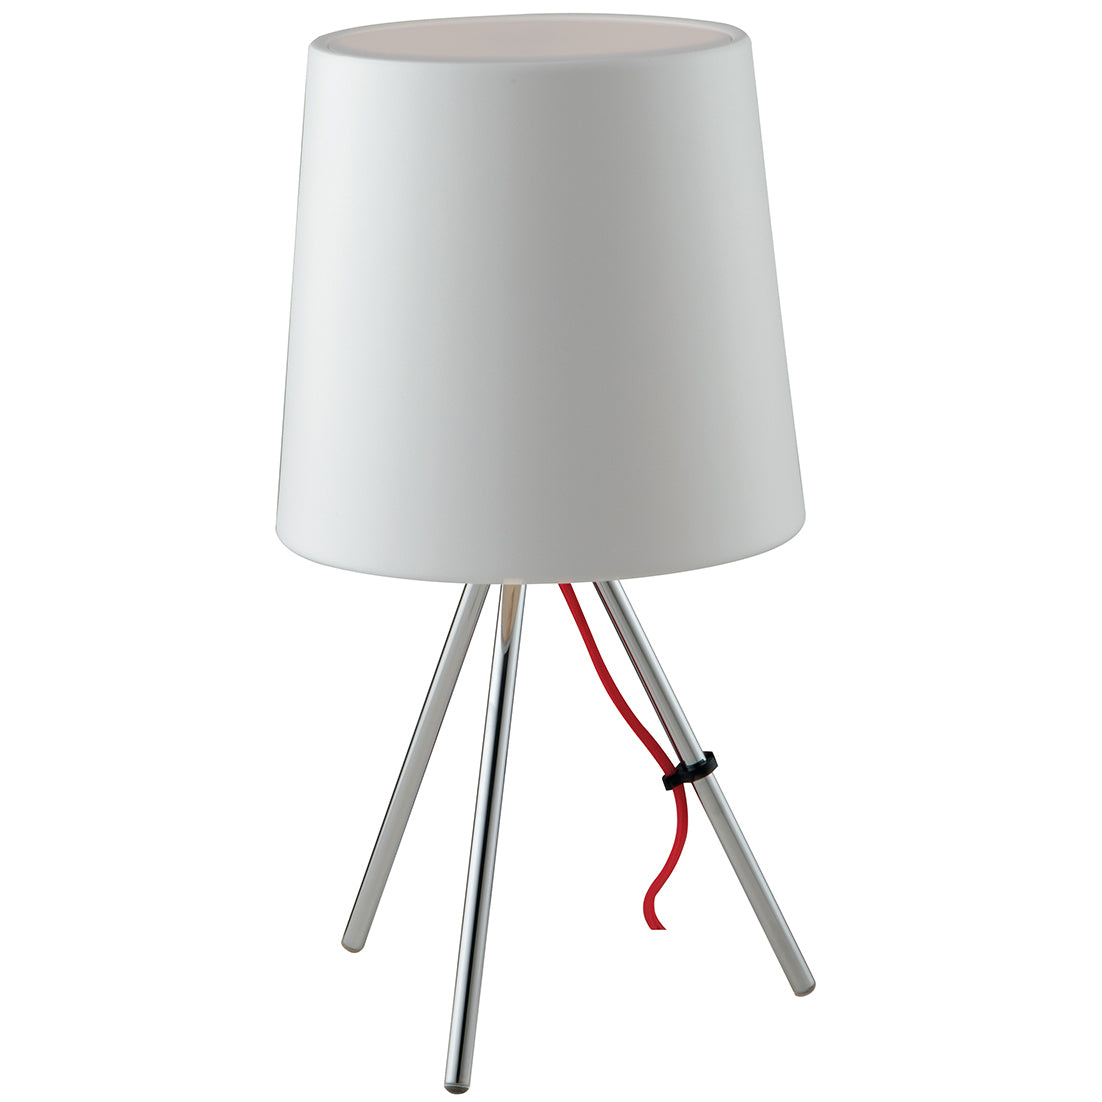 Lampe de table MARLEY en métal avec abat-jour en aluminium